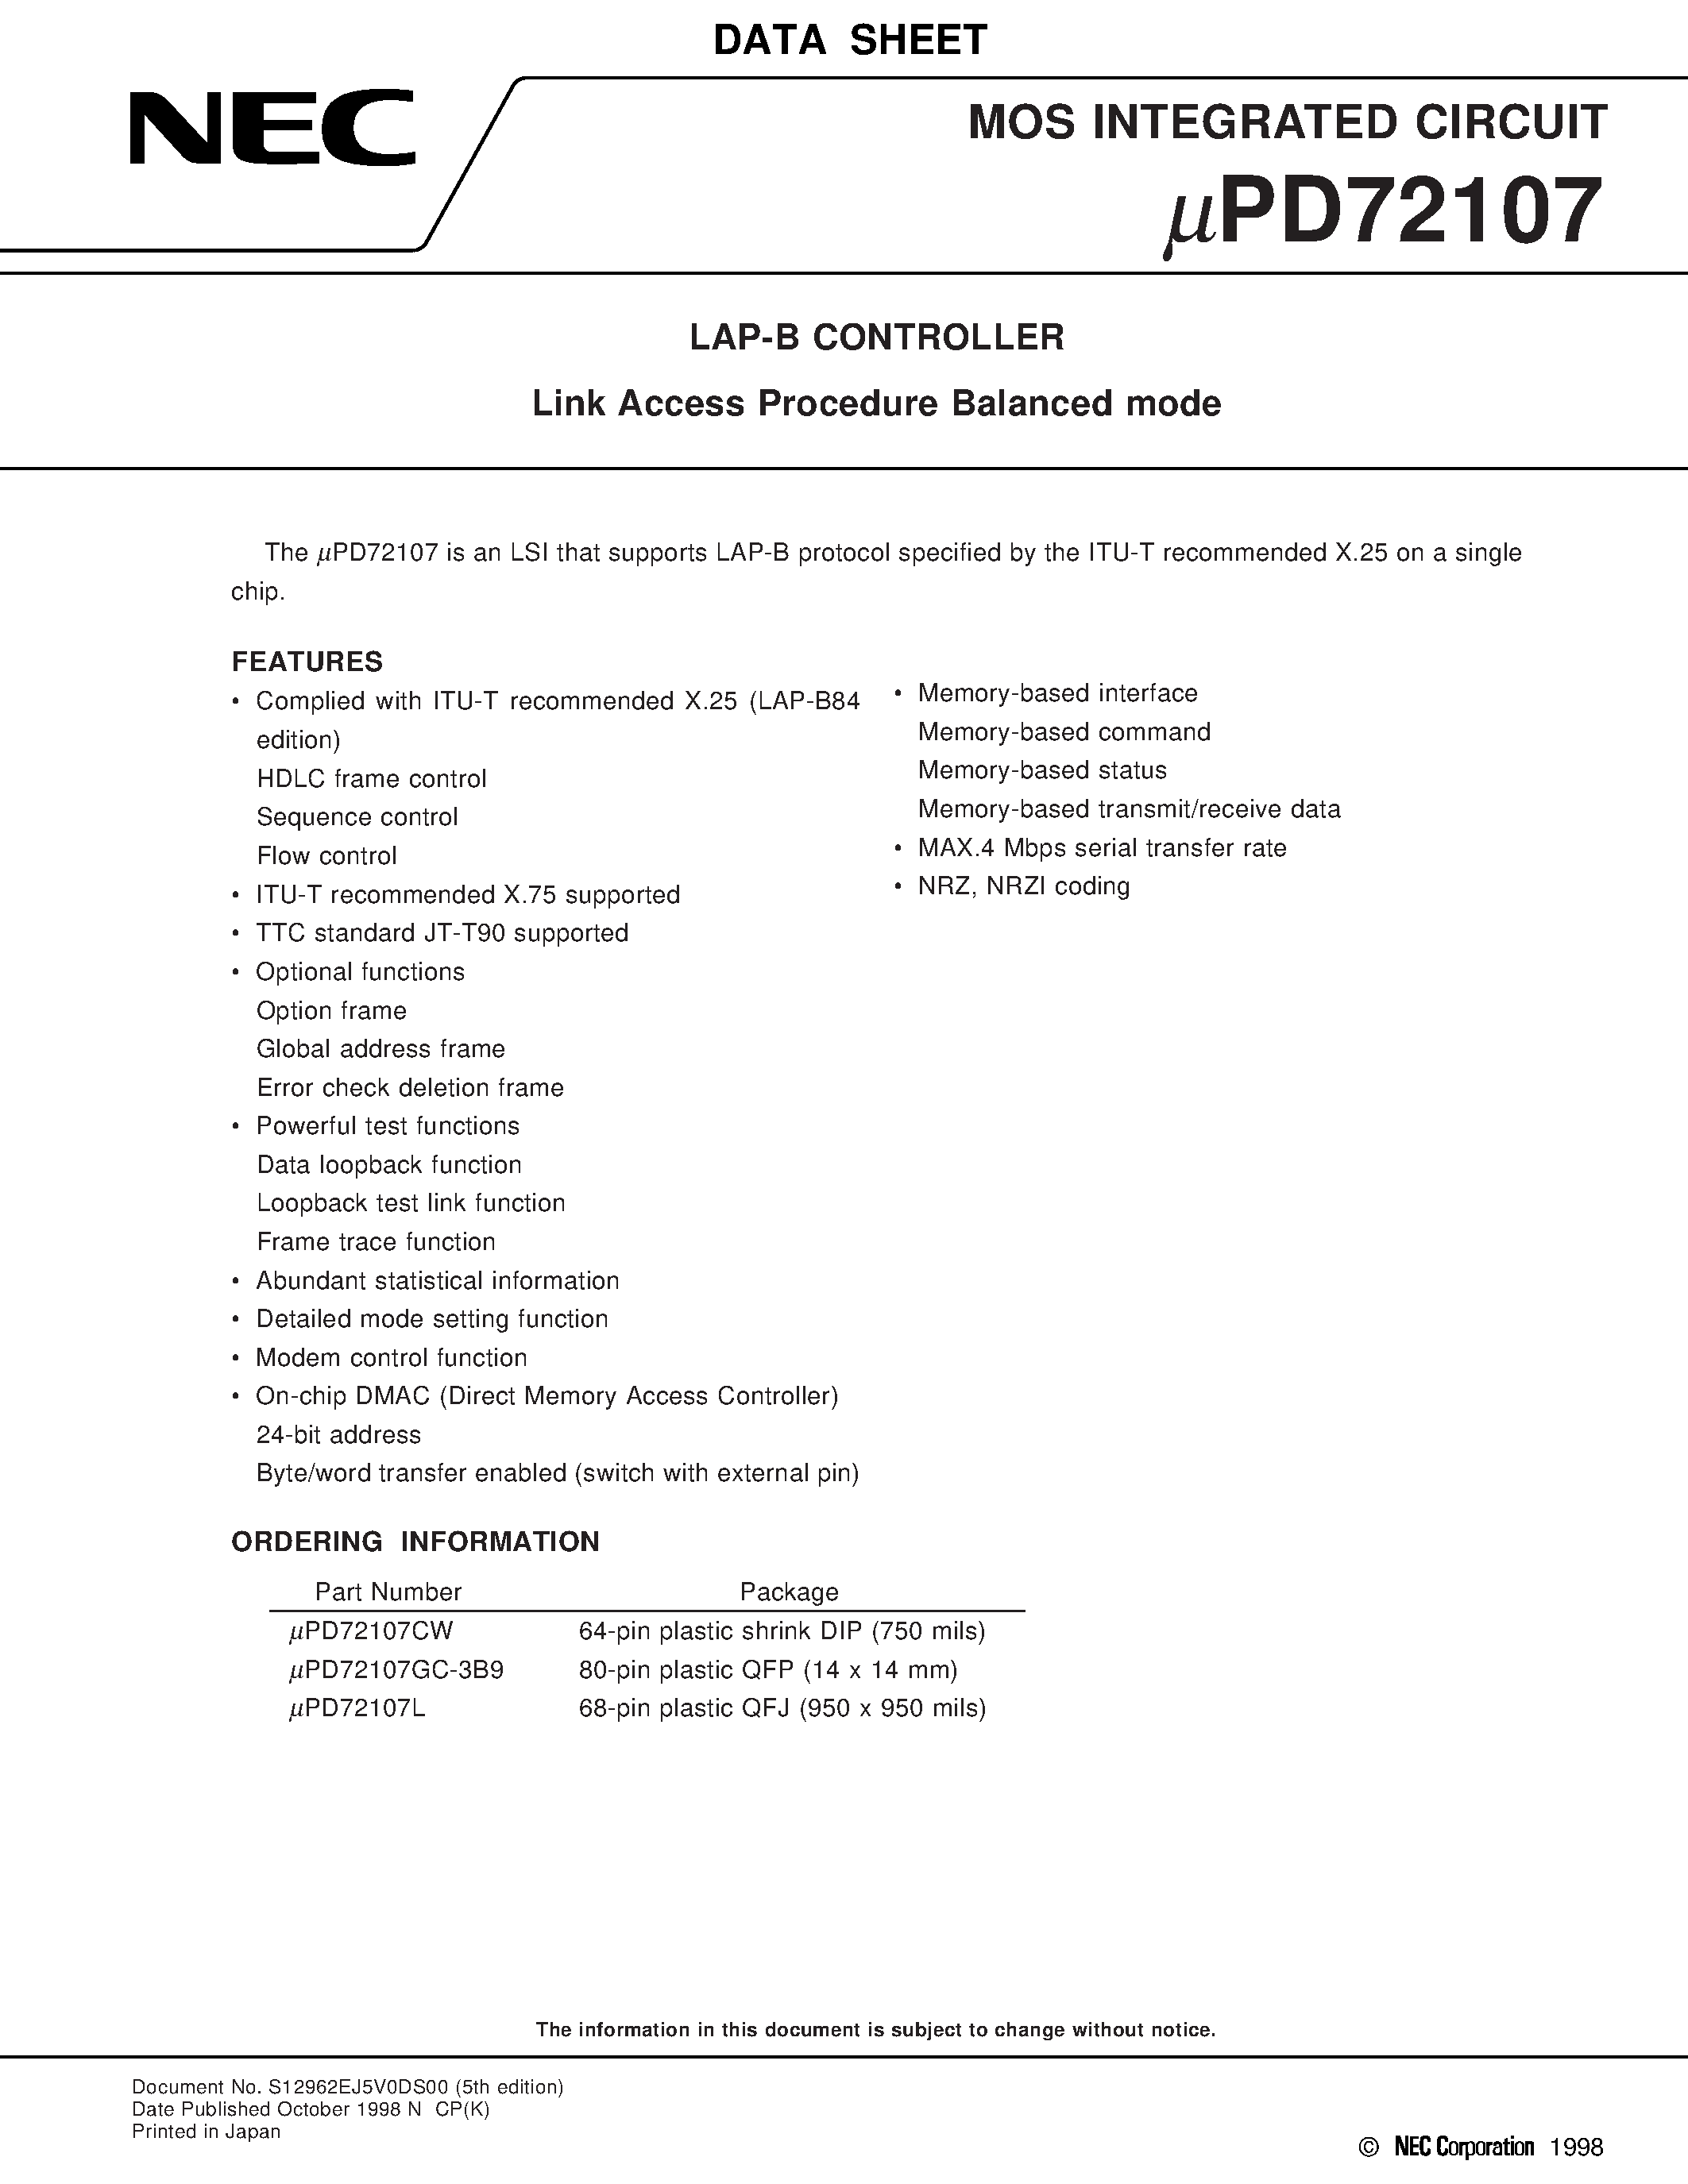 Datasheet UPD72107 - LAP-B CONTROLLER(Link Access Procedure Balanced mode) page 1